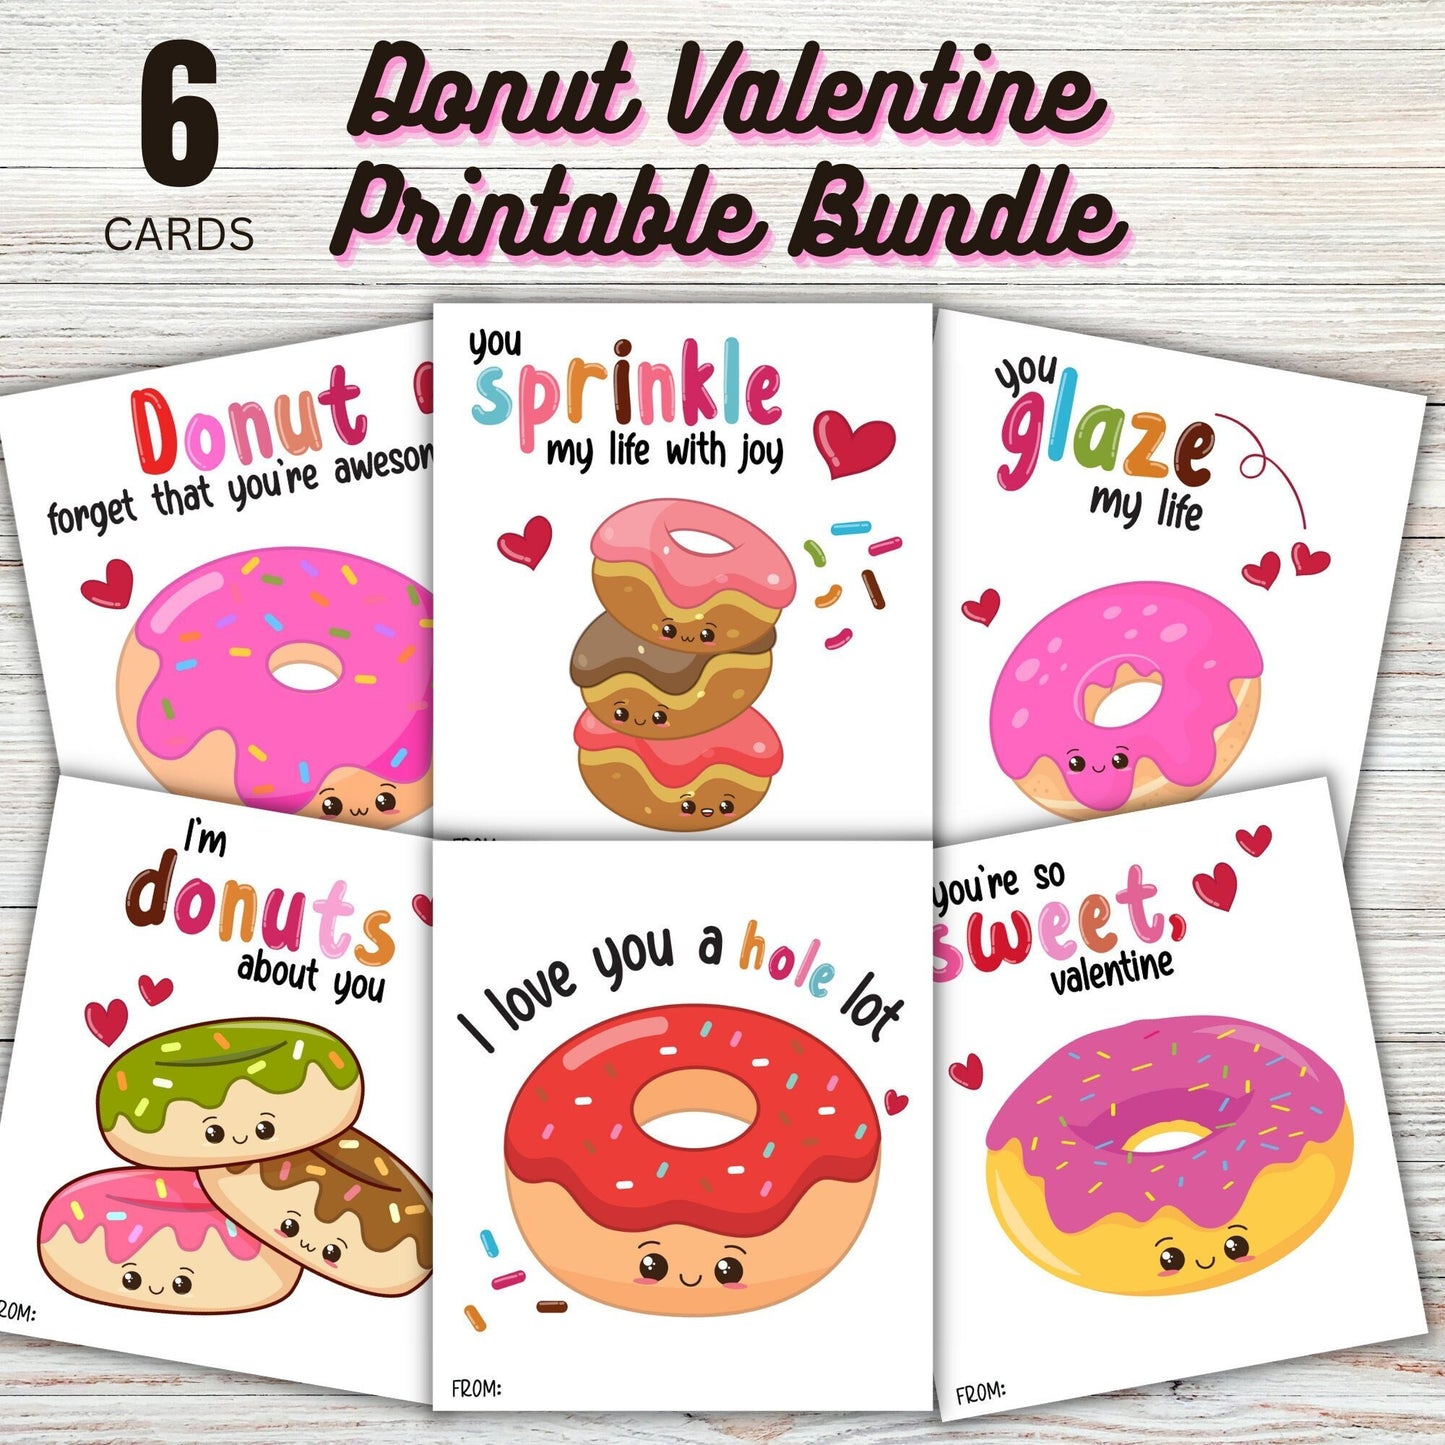 Donut Valentine Printable Bundle - Valentines Day Printable Cards PDF - Instant Download